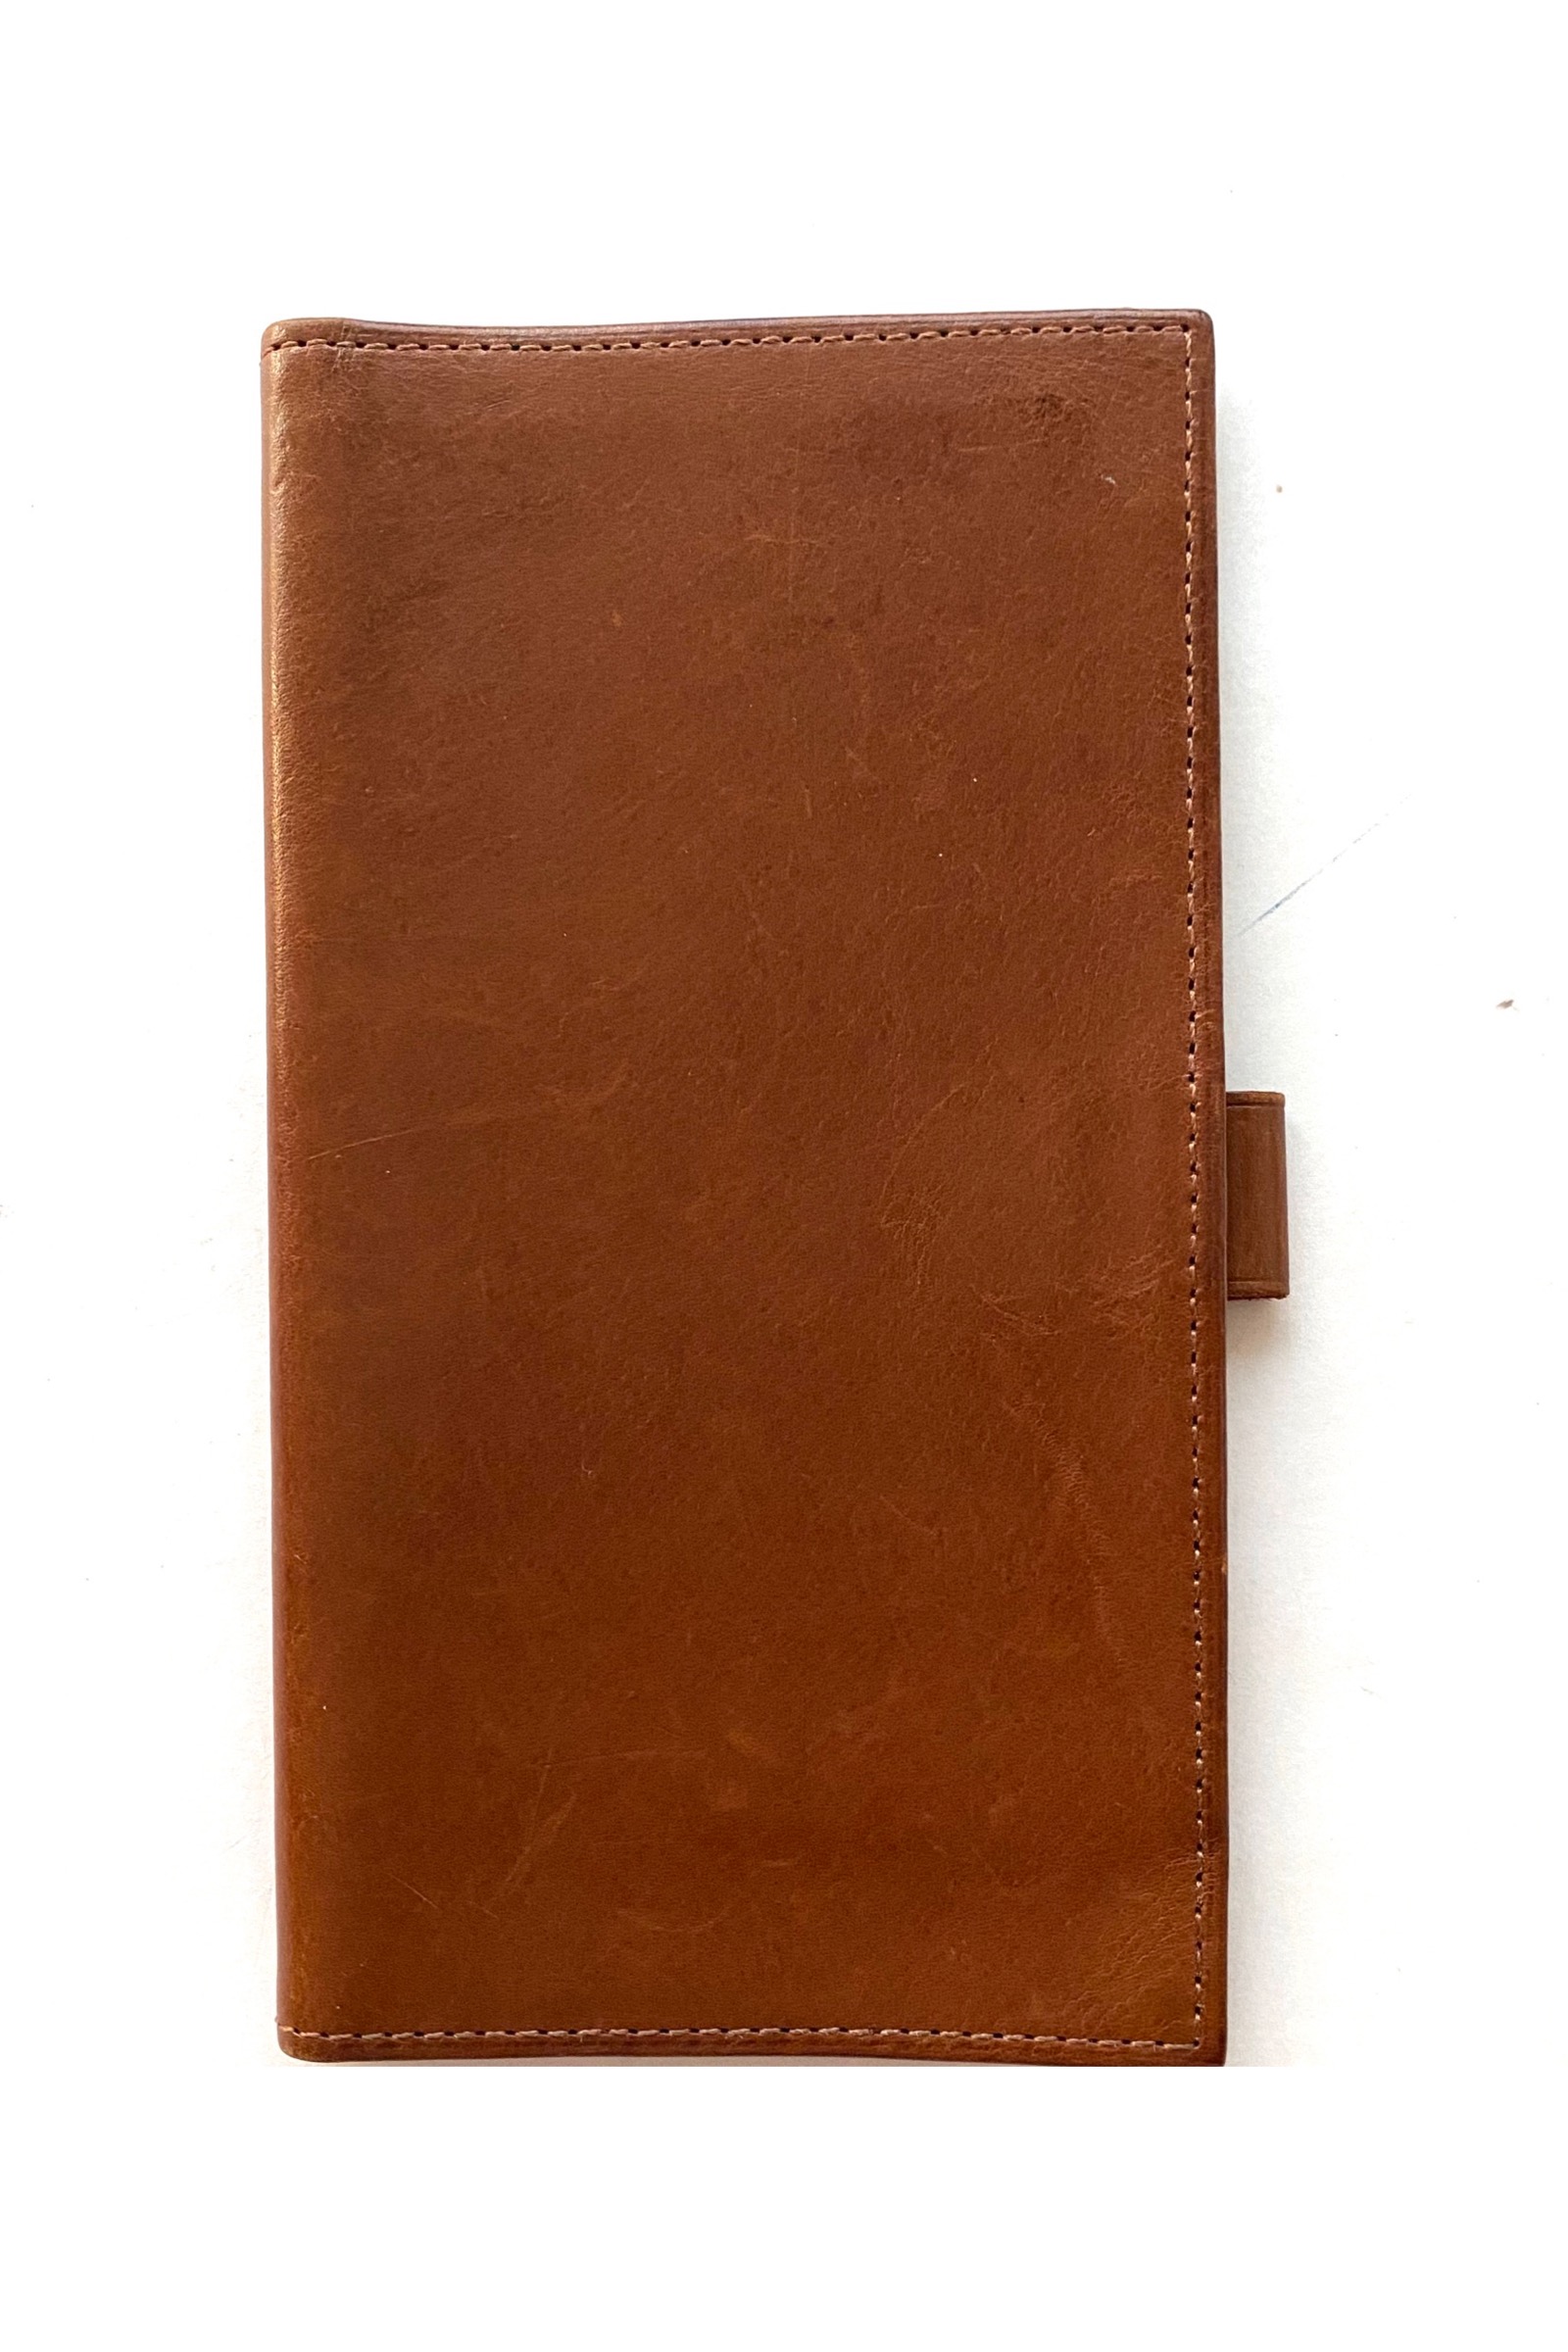 COACH light brown leather bifold checkbook cover | Modaville